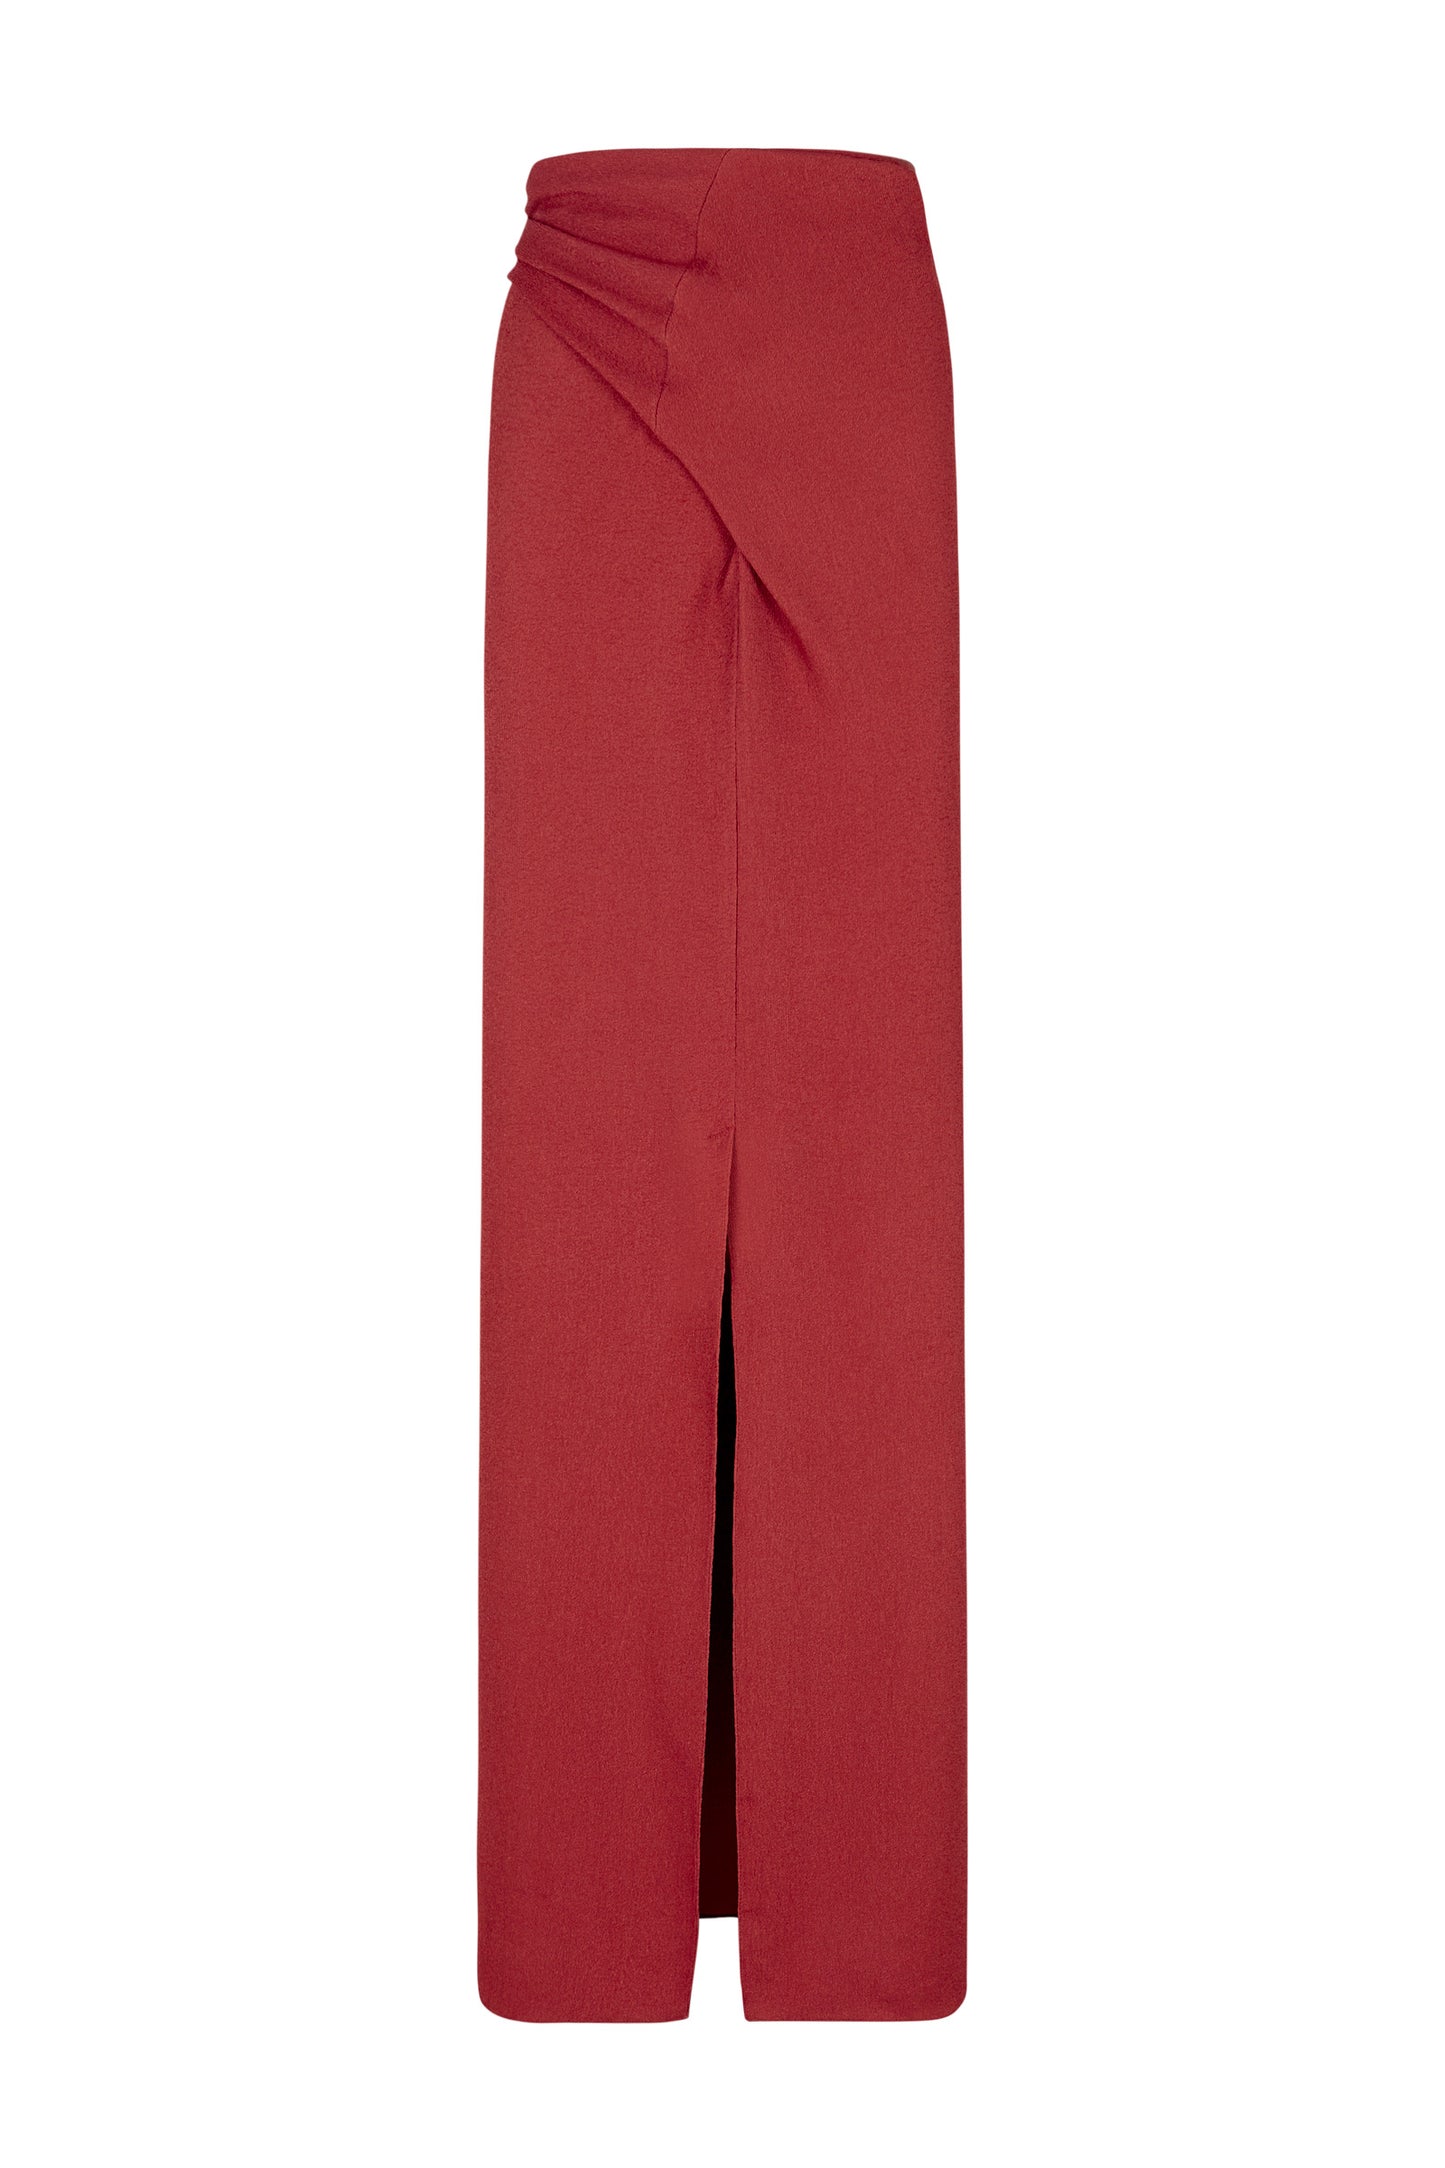 Fiona, carmine red wrap skirt